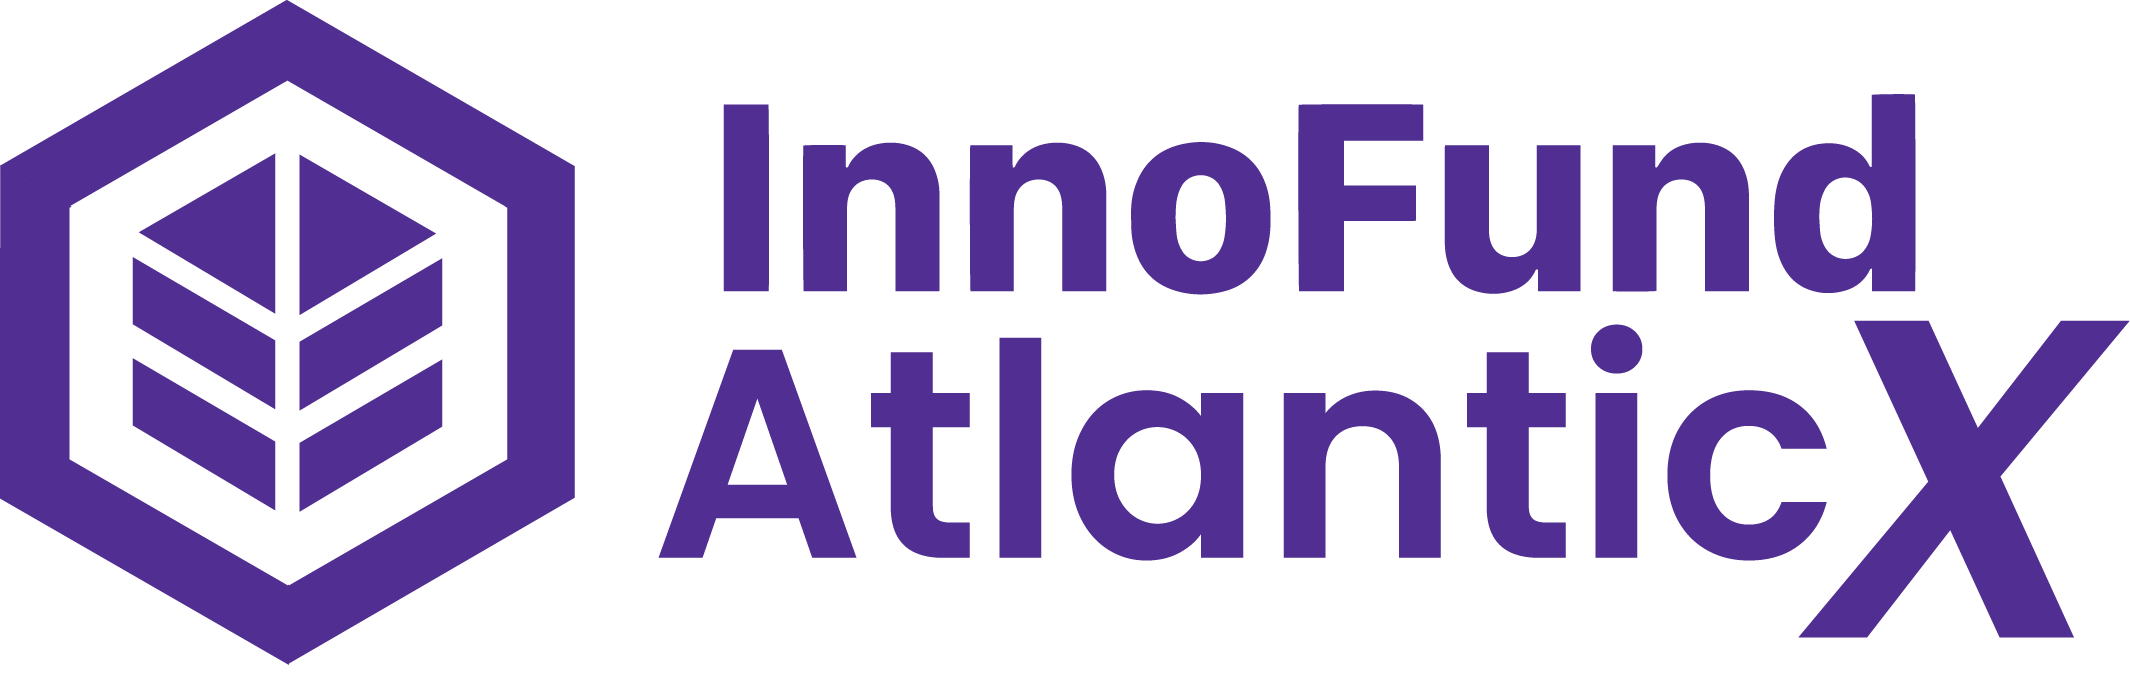 AtlanticX Logo